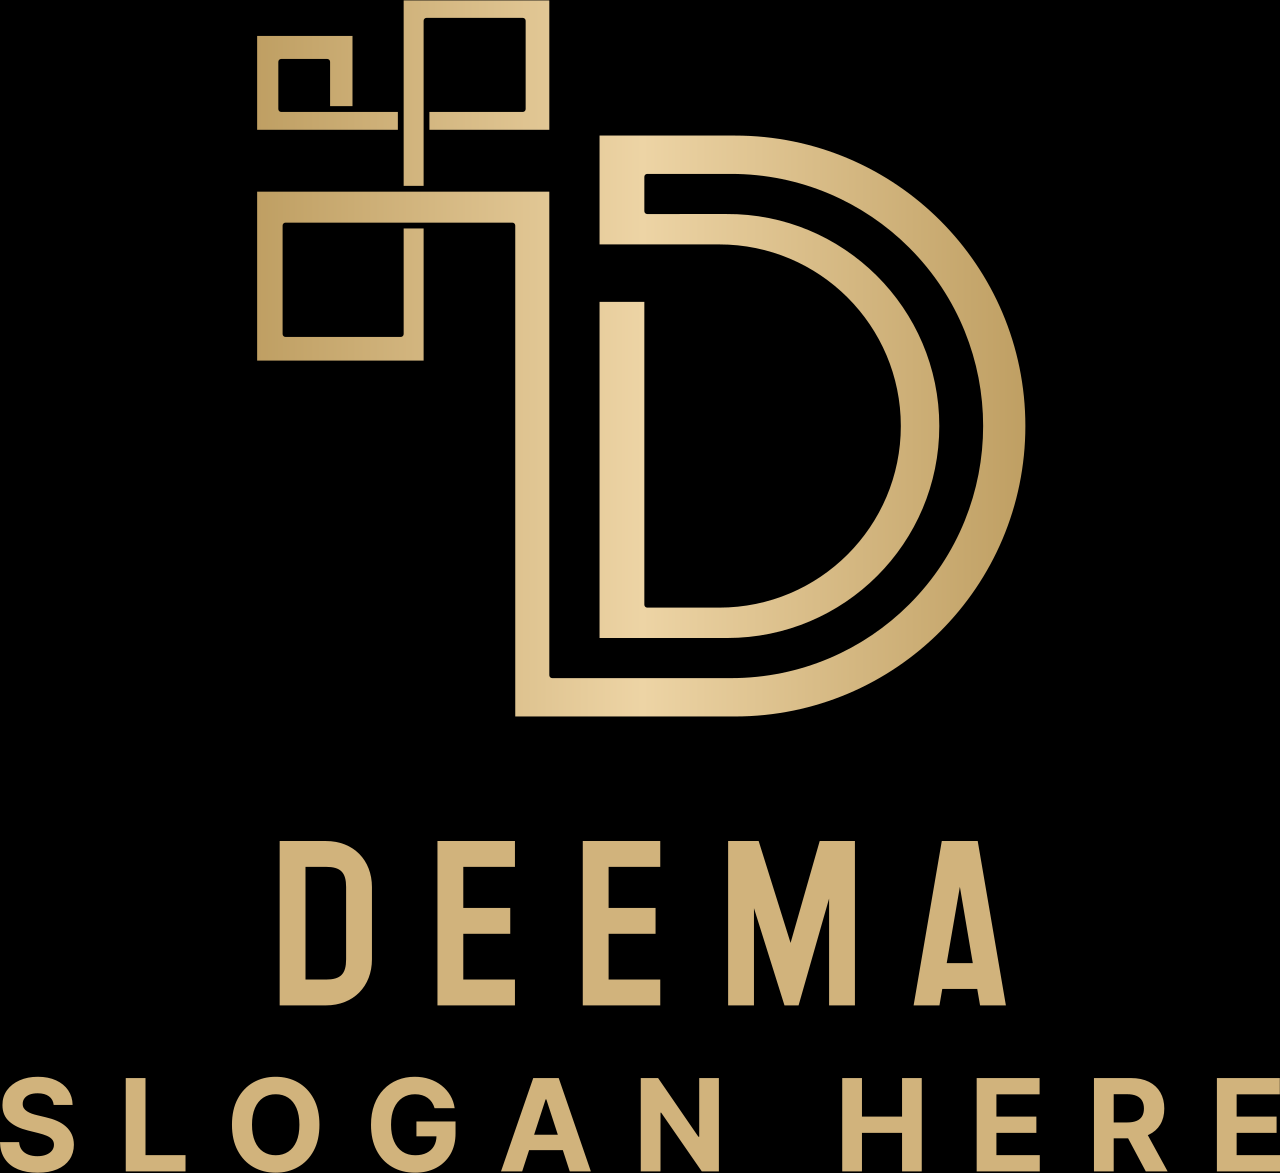 Deema's logo